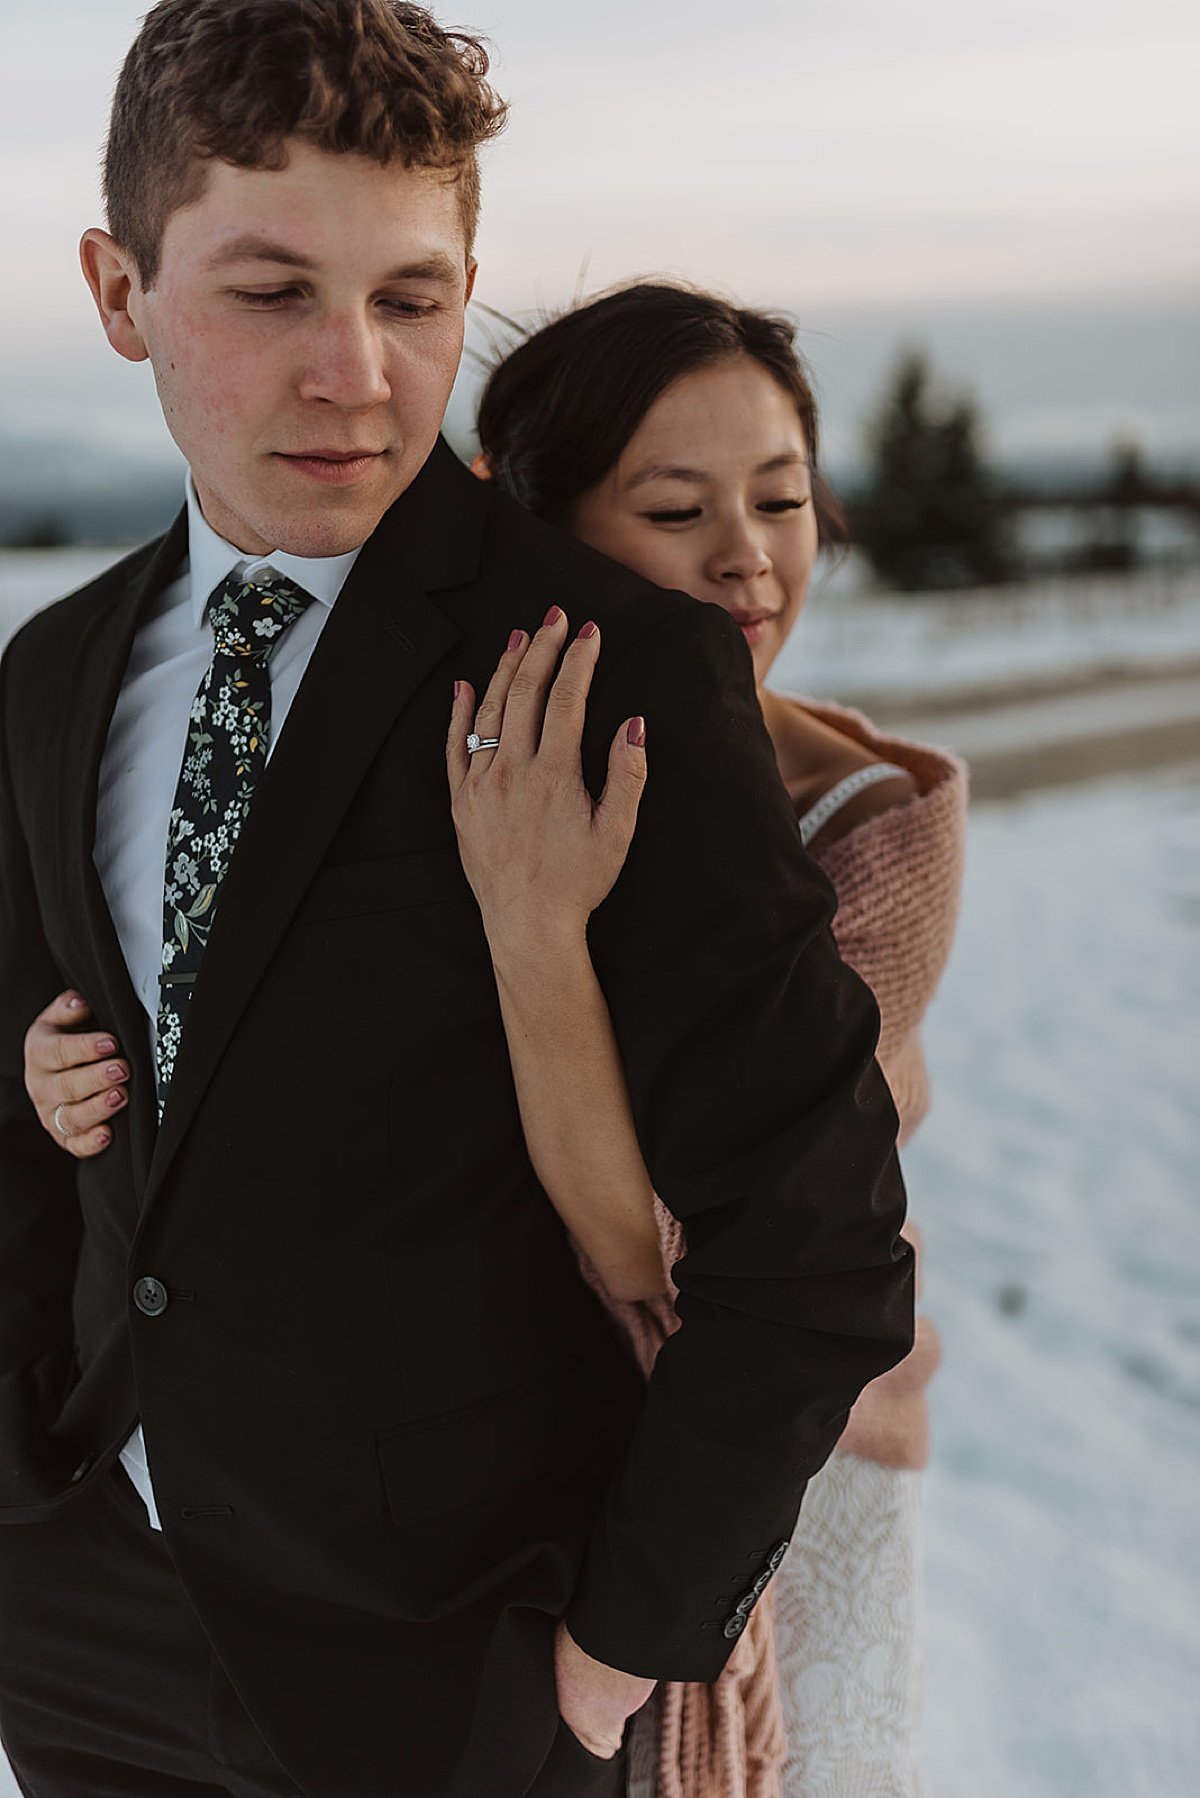  bride wearing diamond ring embraces newlywed husband during evening twilight shoot by alaska wedding photographer 